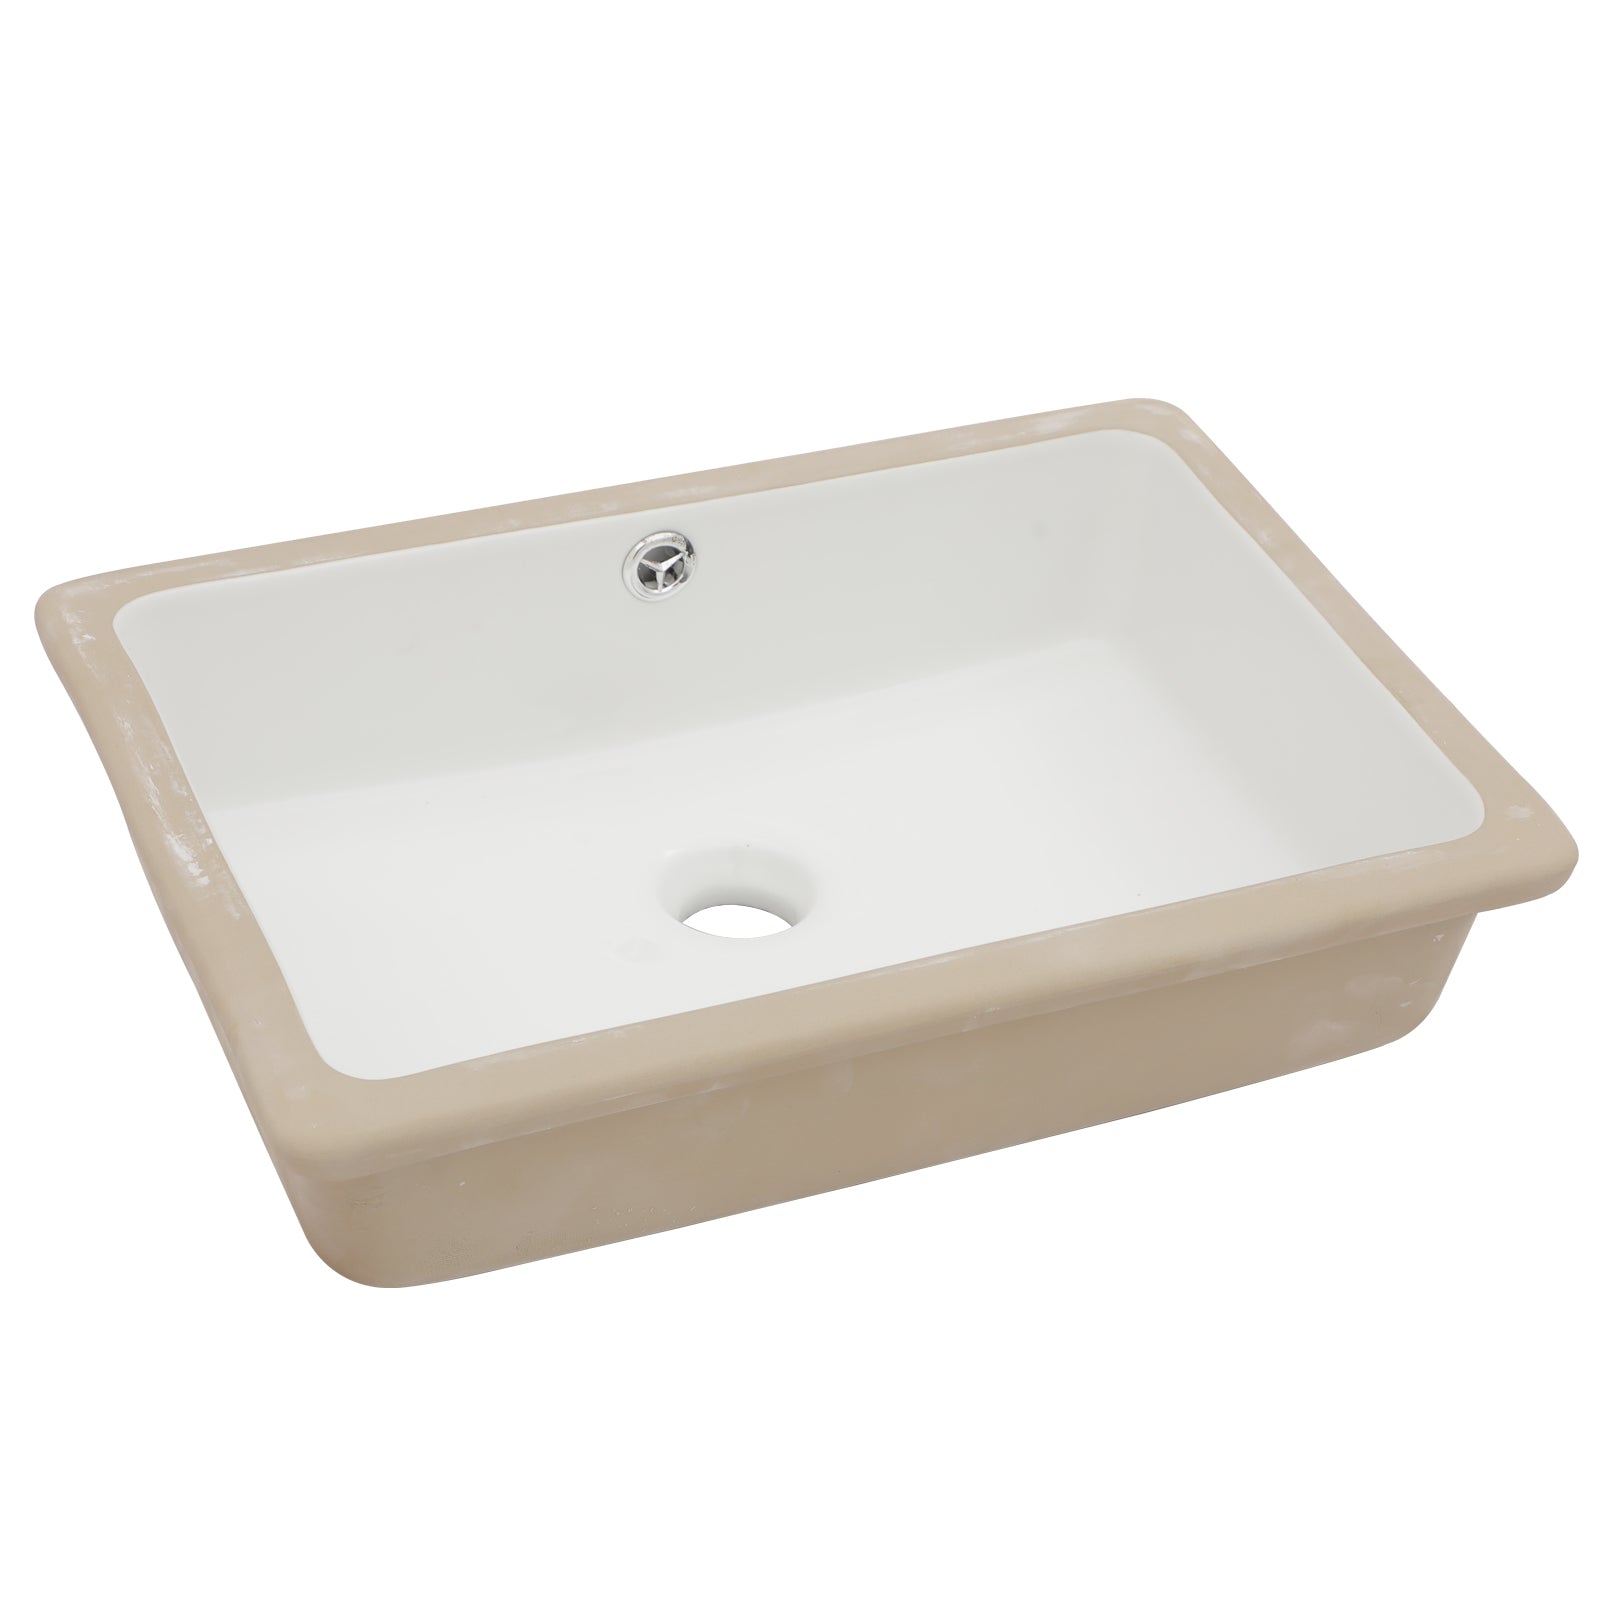 Lordear 18x12.5 Inch Bathroom Vanity Sink Undermount Rectangle White Porcelain Ceramic Bathroom Under Counter Lavatory Vanity Sink Basin with Overflow | Bathroom Sink, Bathroom Vessel Sink, Big Deal | Lordear